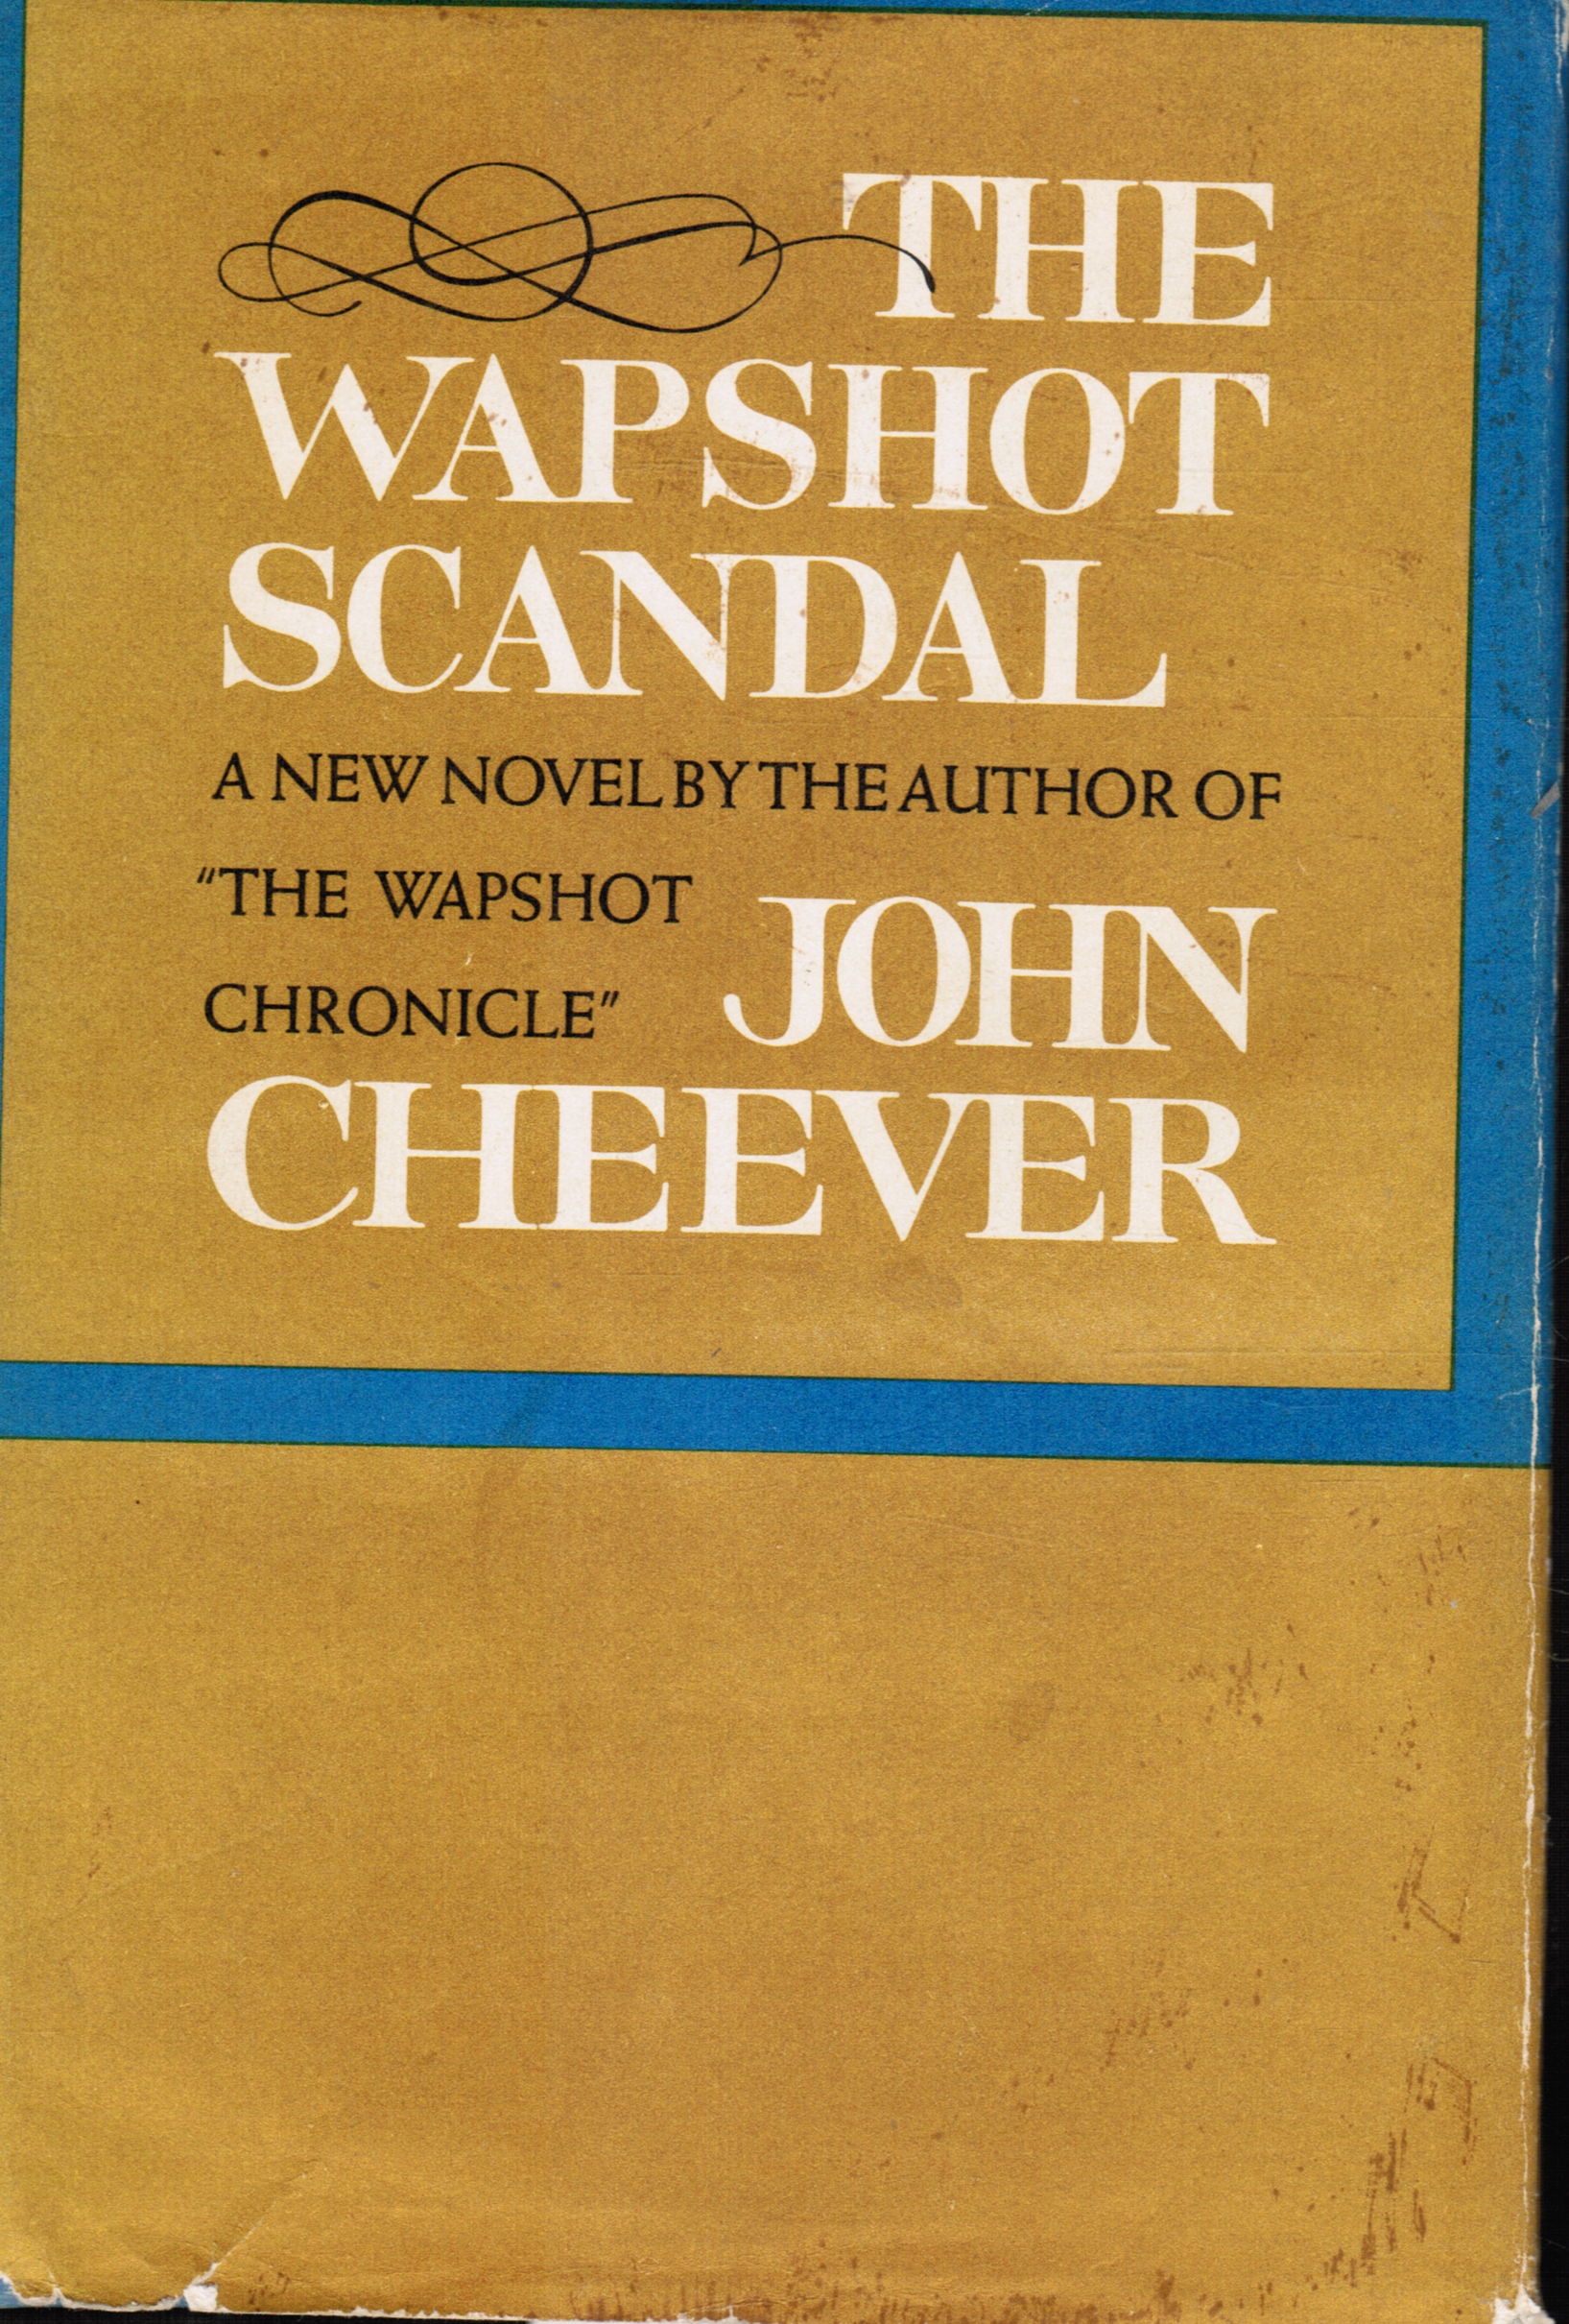 CHEEVER, JOHN - The Wapshot Scandal